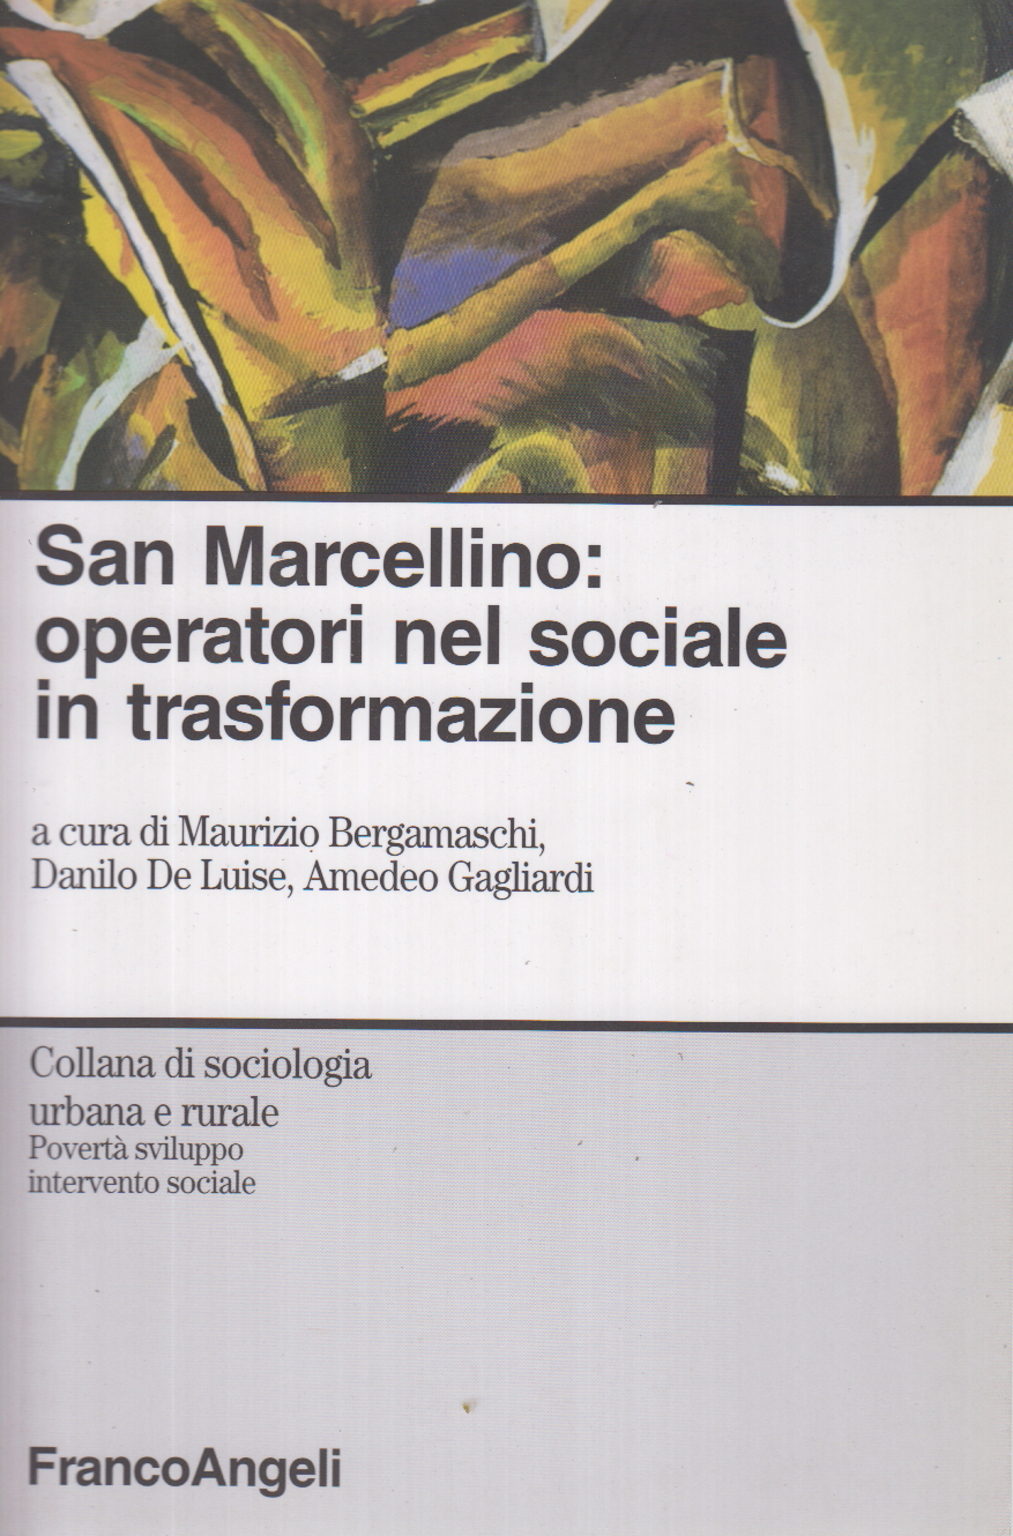 San Marcellino: akteure in soziale verwandelt, Maurizio Bergamaschi Danilo De Luise Amedeo Gagliardi